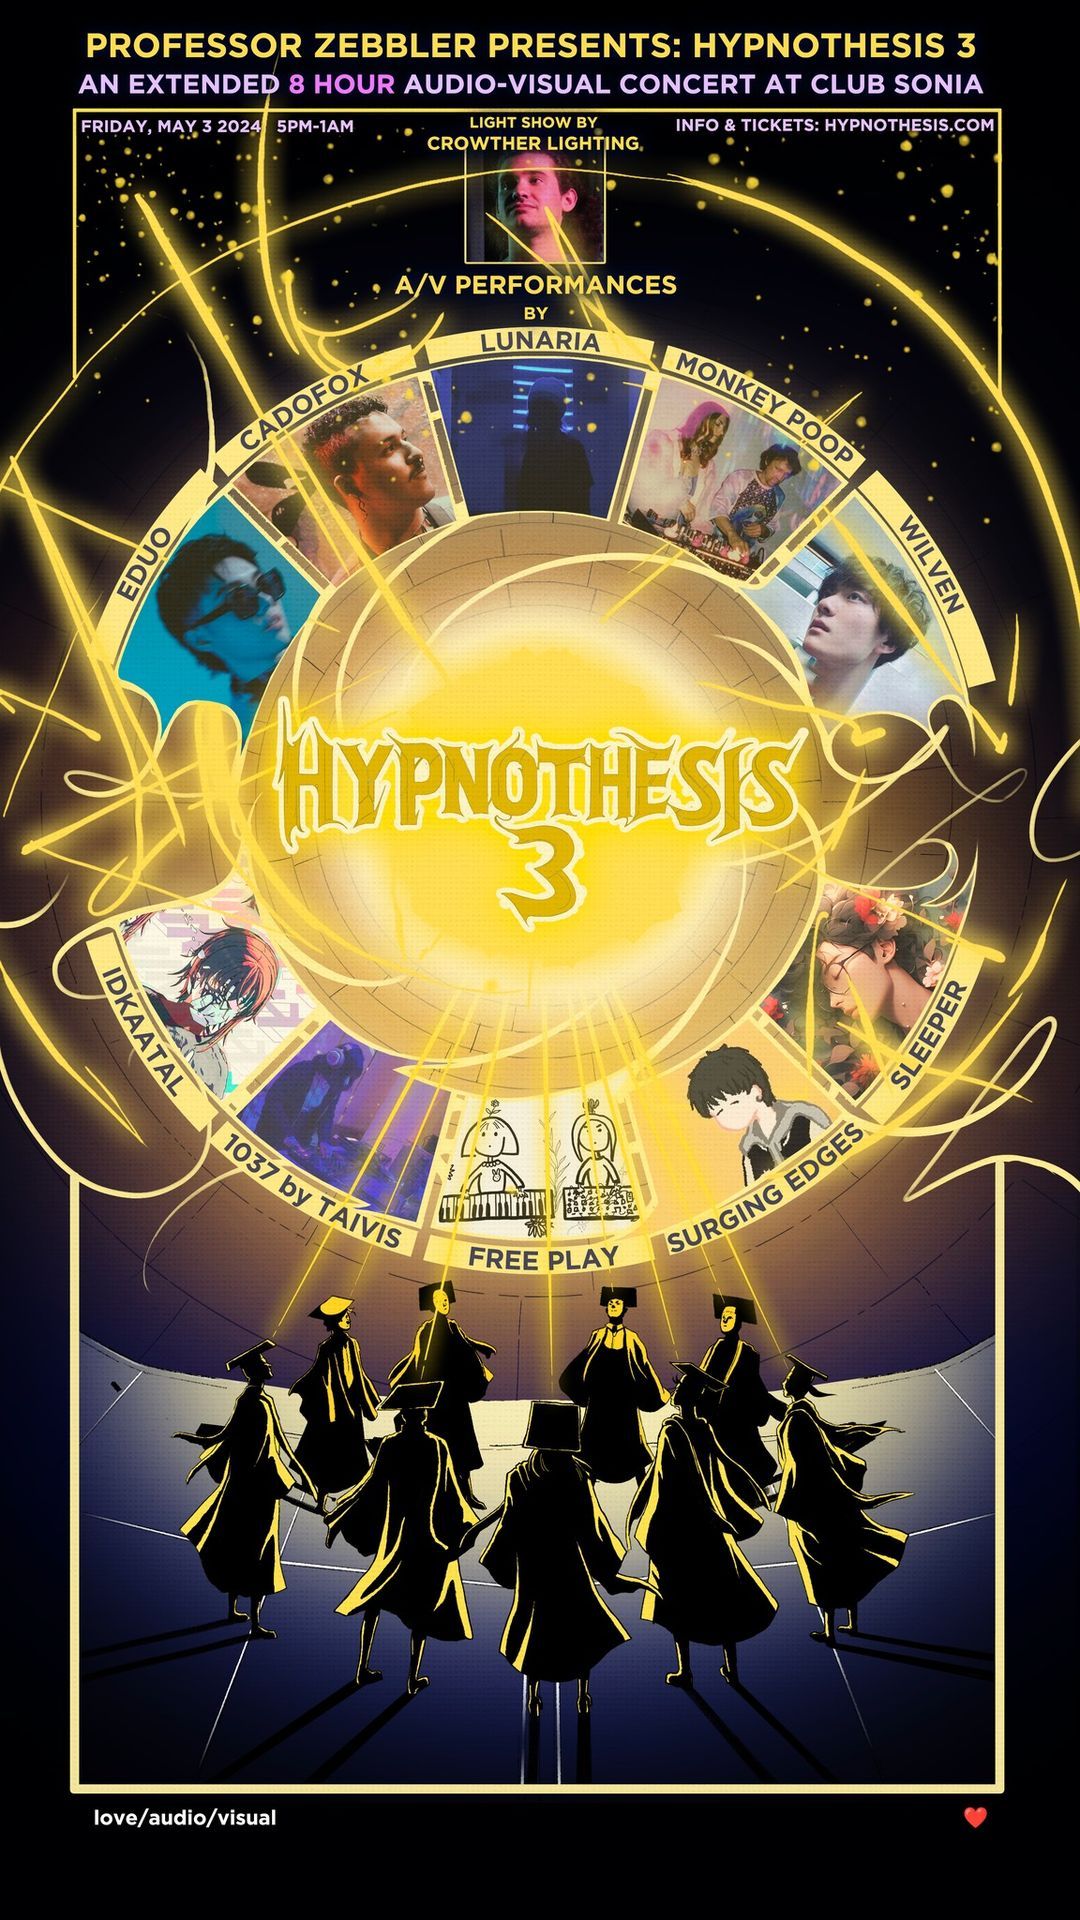 HYPNOTHESIS 3